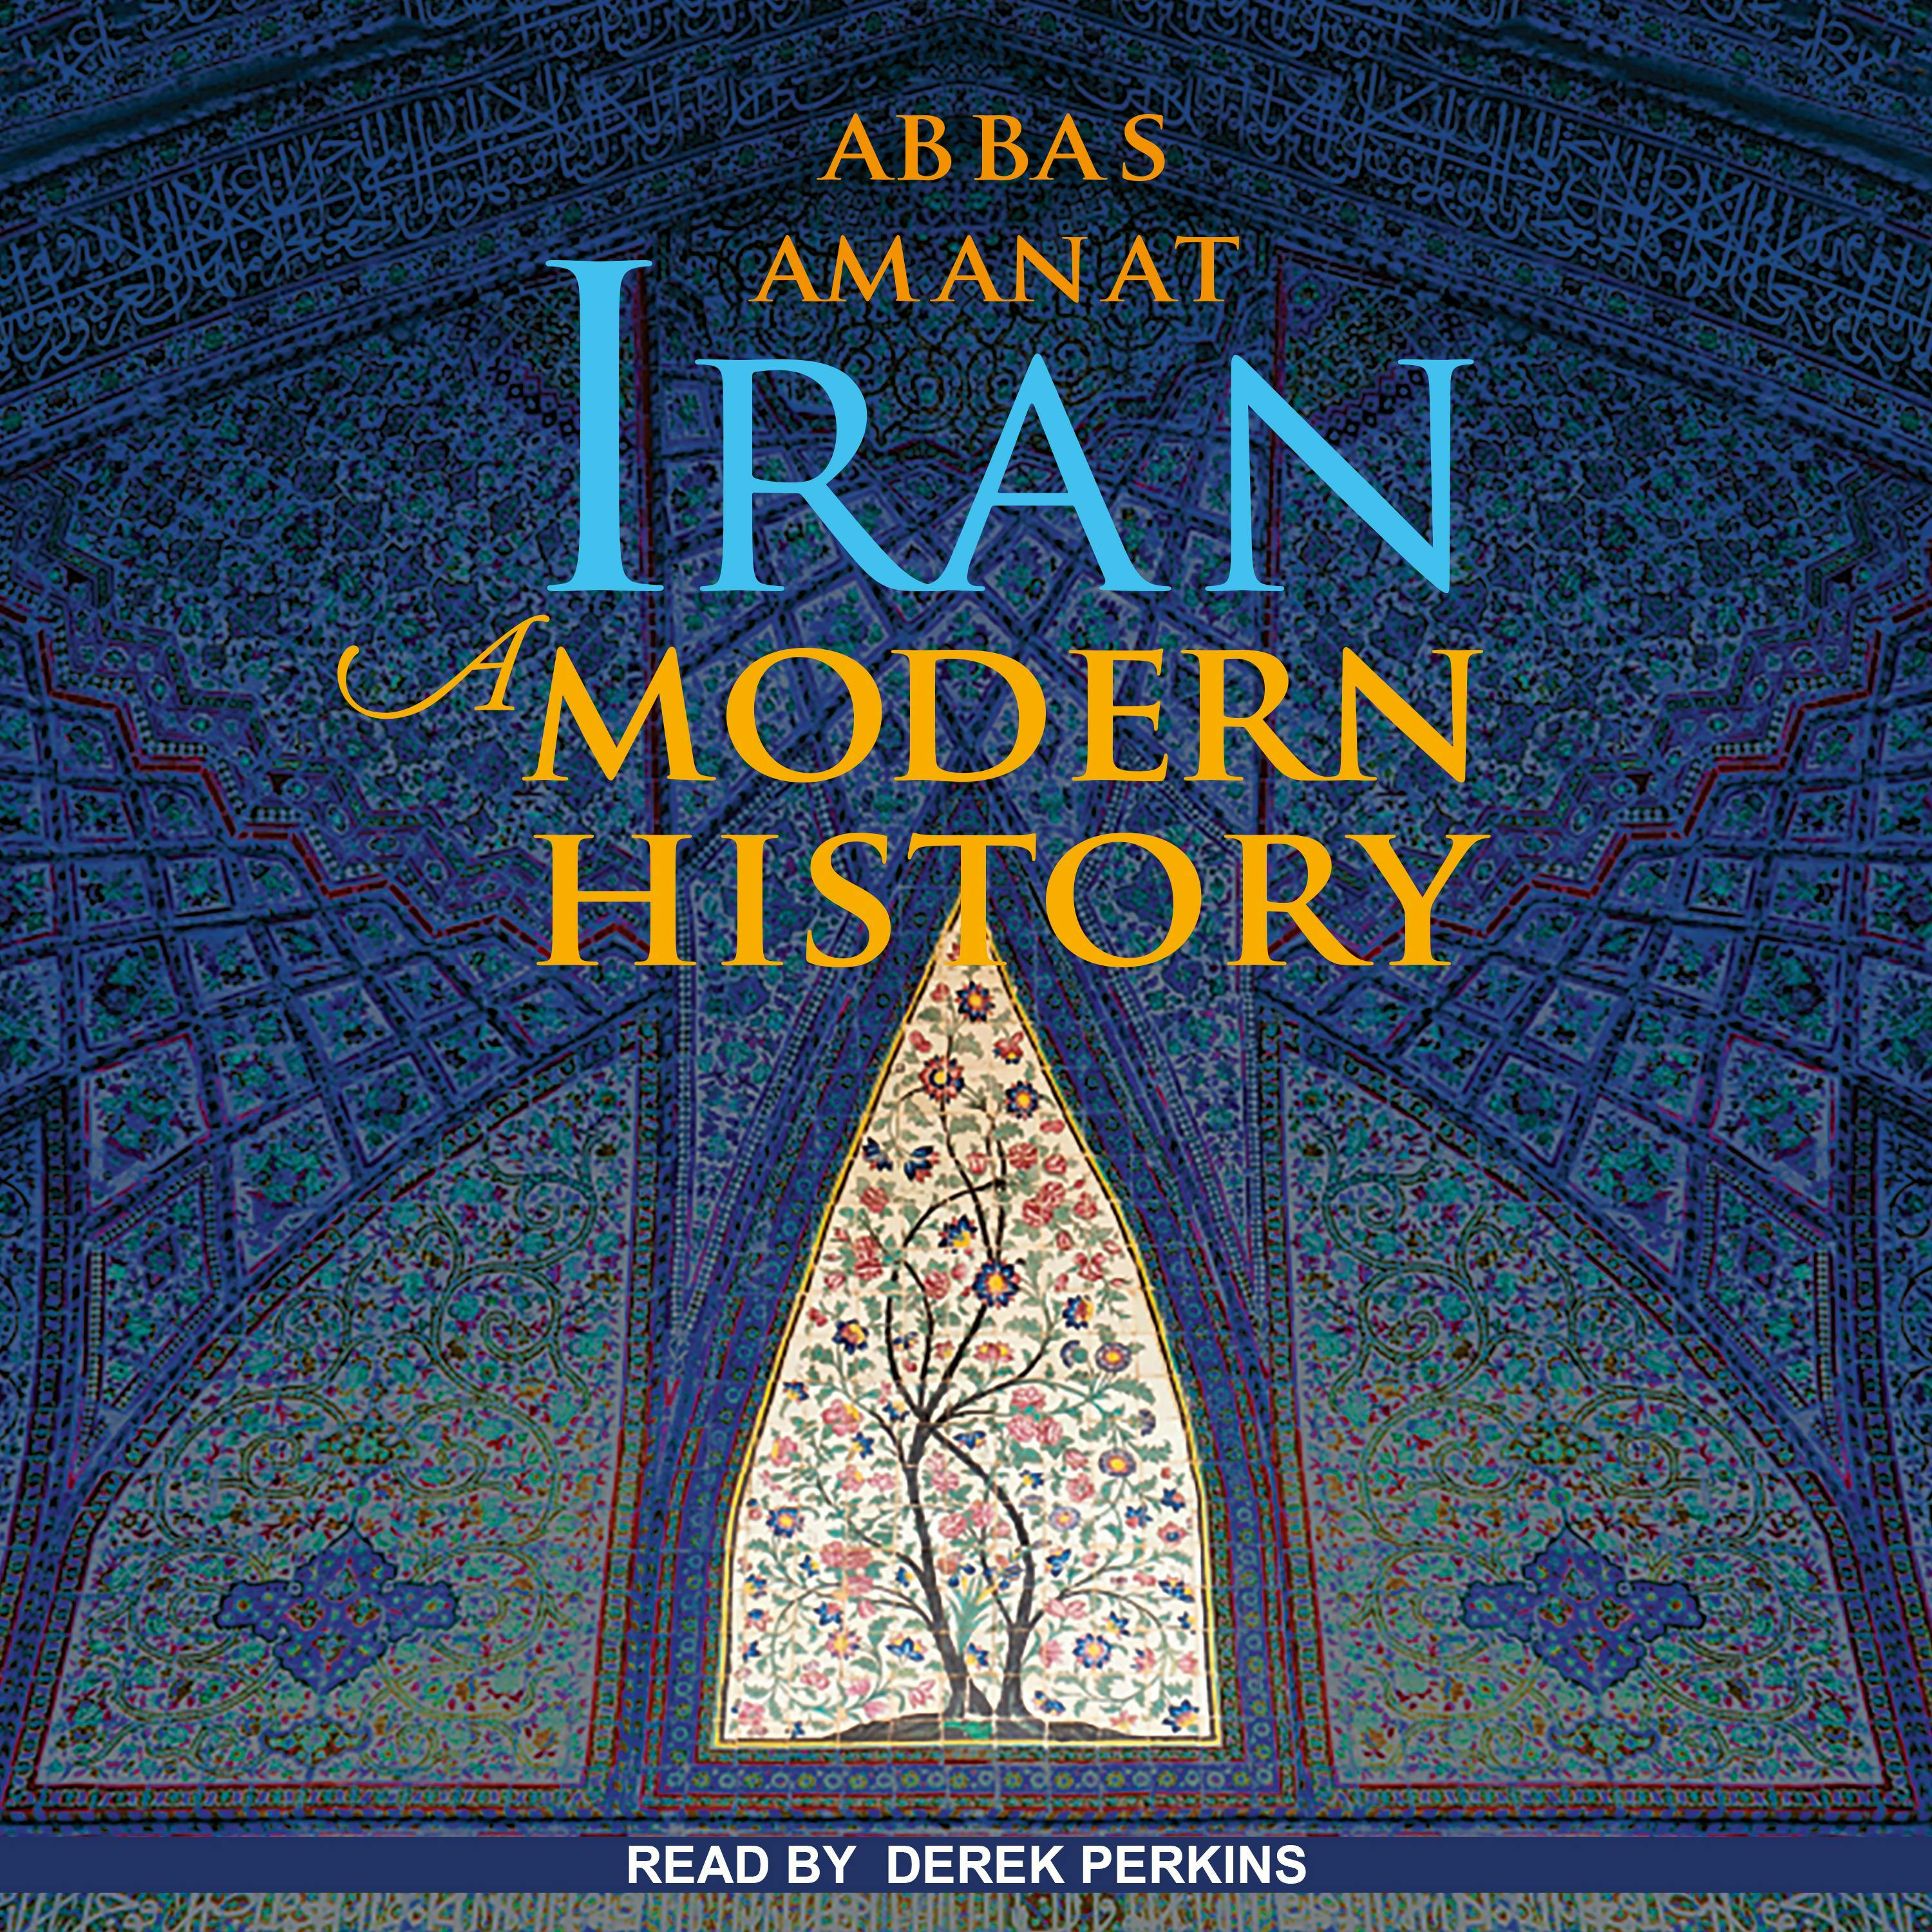 Iran: A Modern History - Abbas Amanat